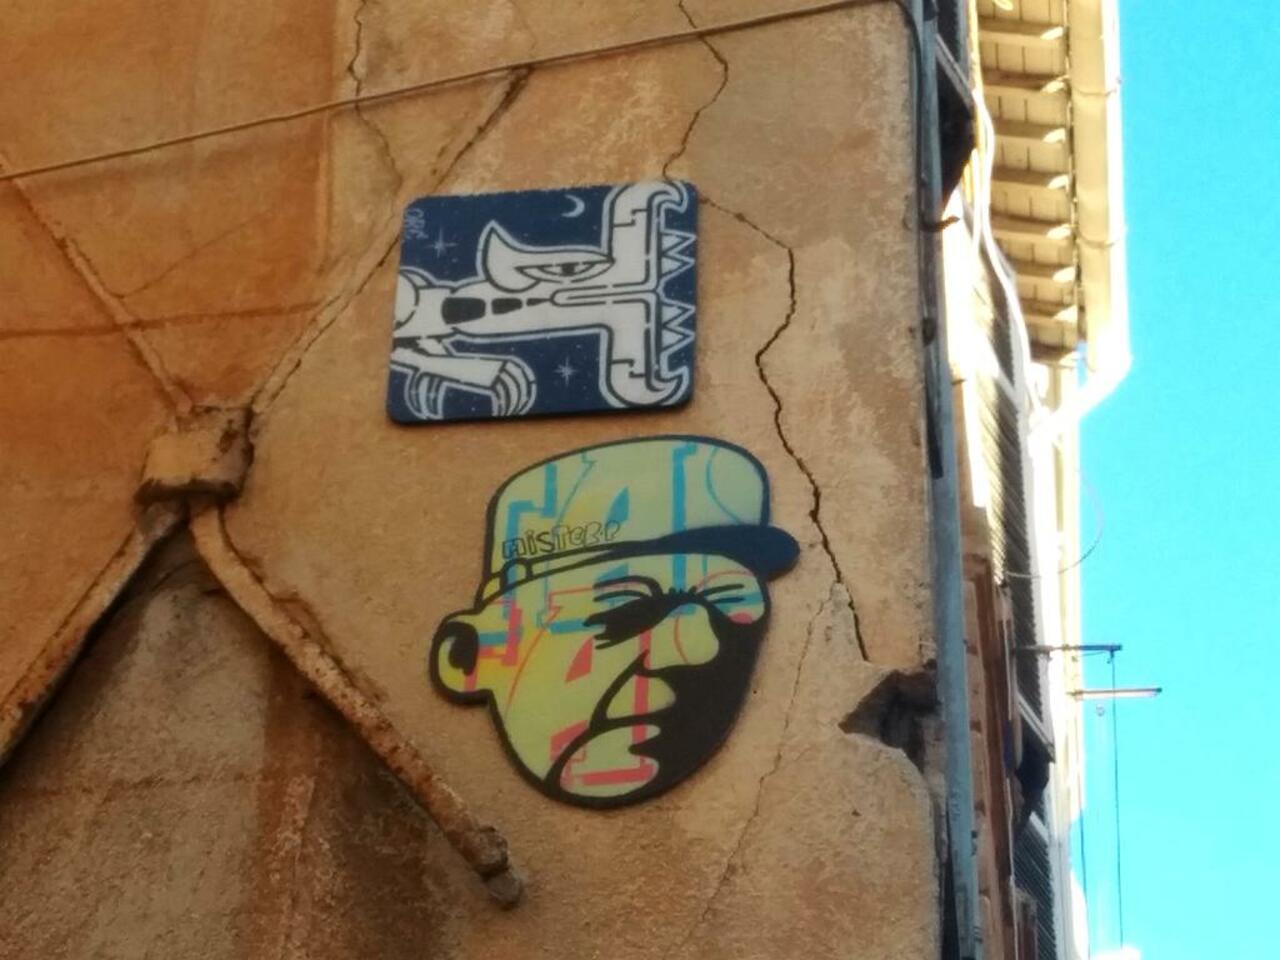 Street Art by Ore in #Marseille http://www.urbacolors.com #art #mural #graffiti #streetart http://t.co/QVBXIKJugf